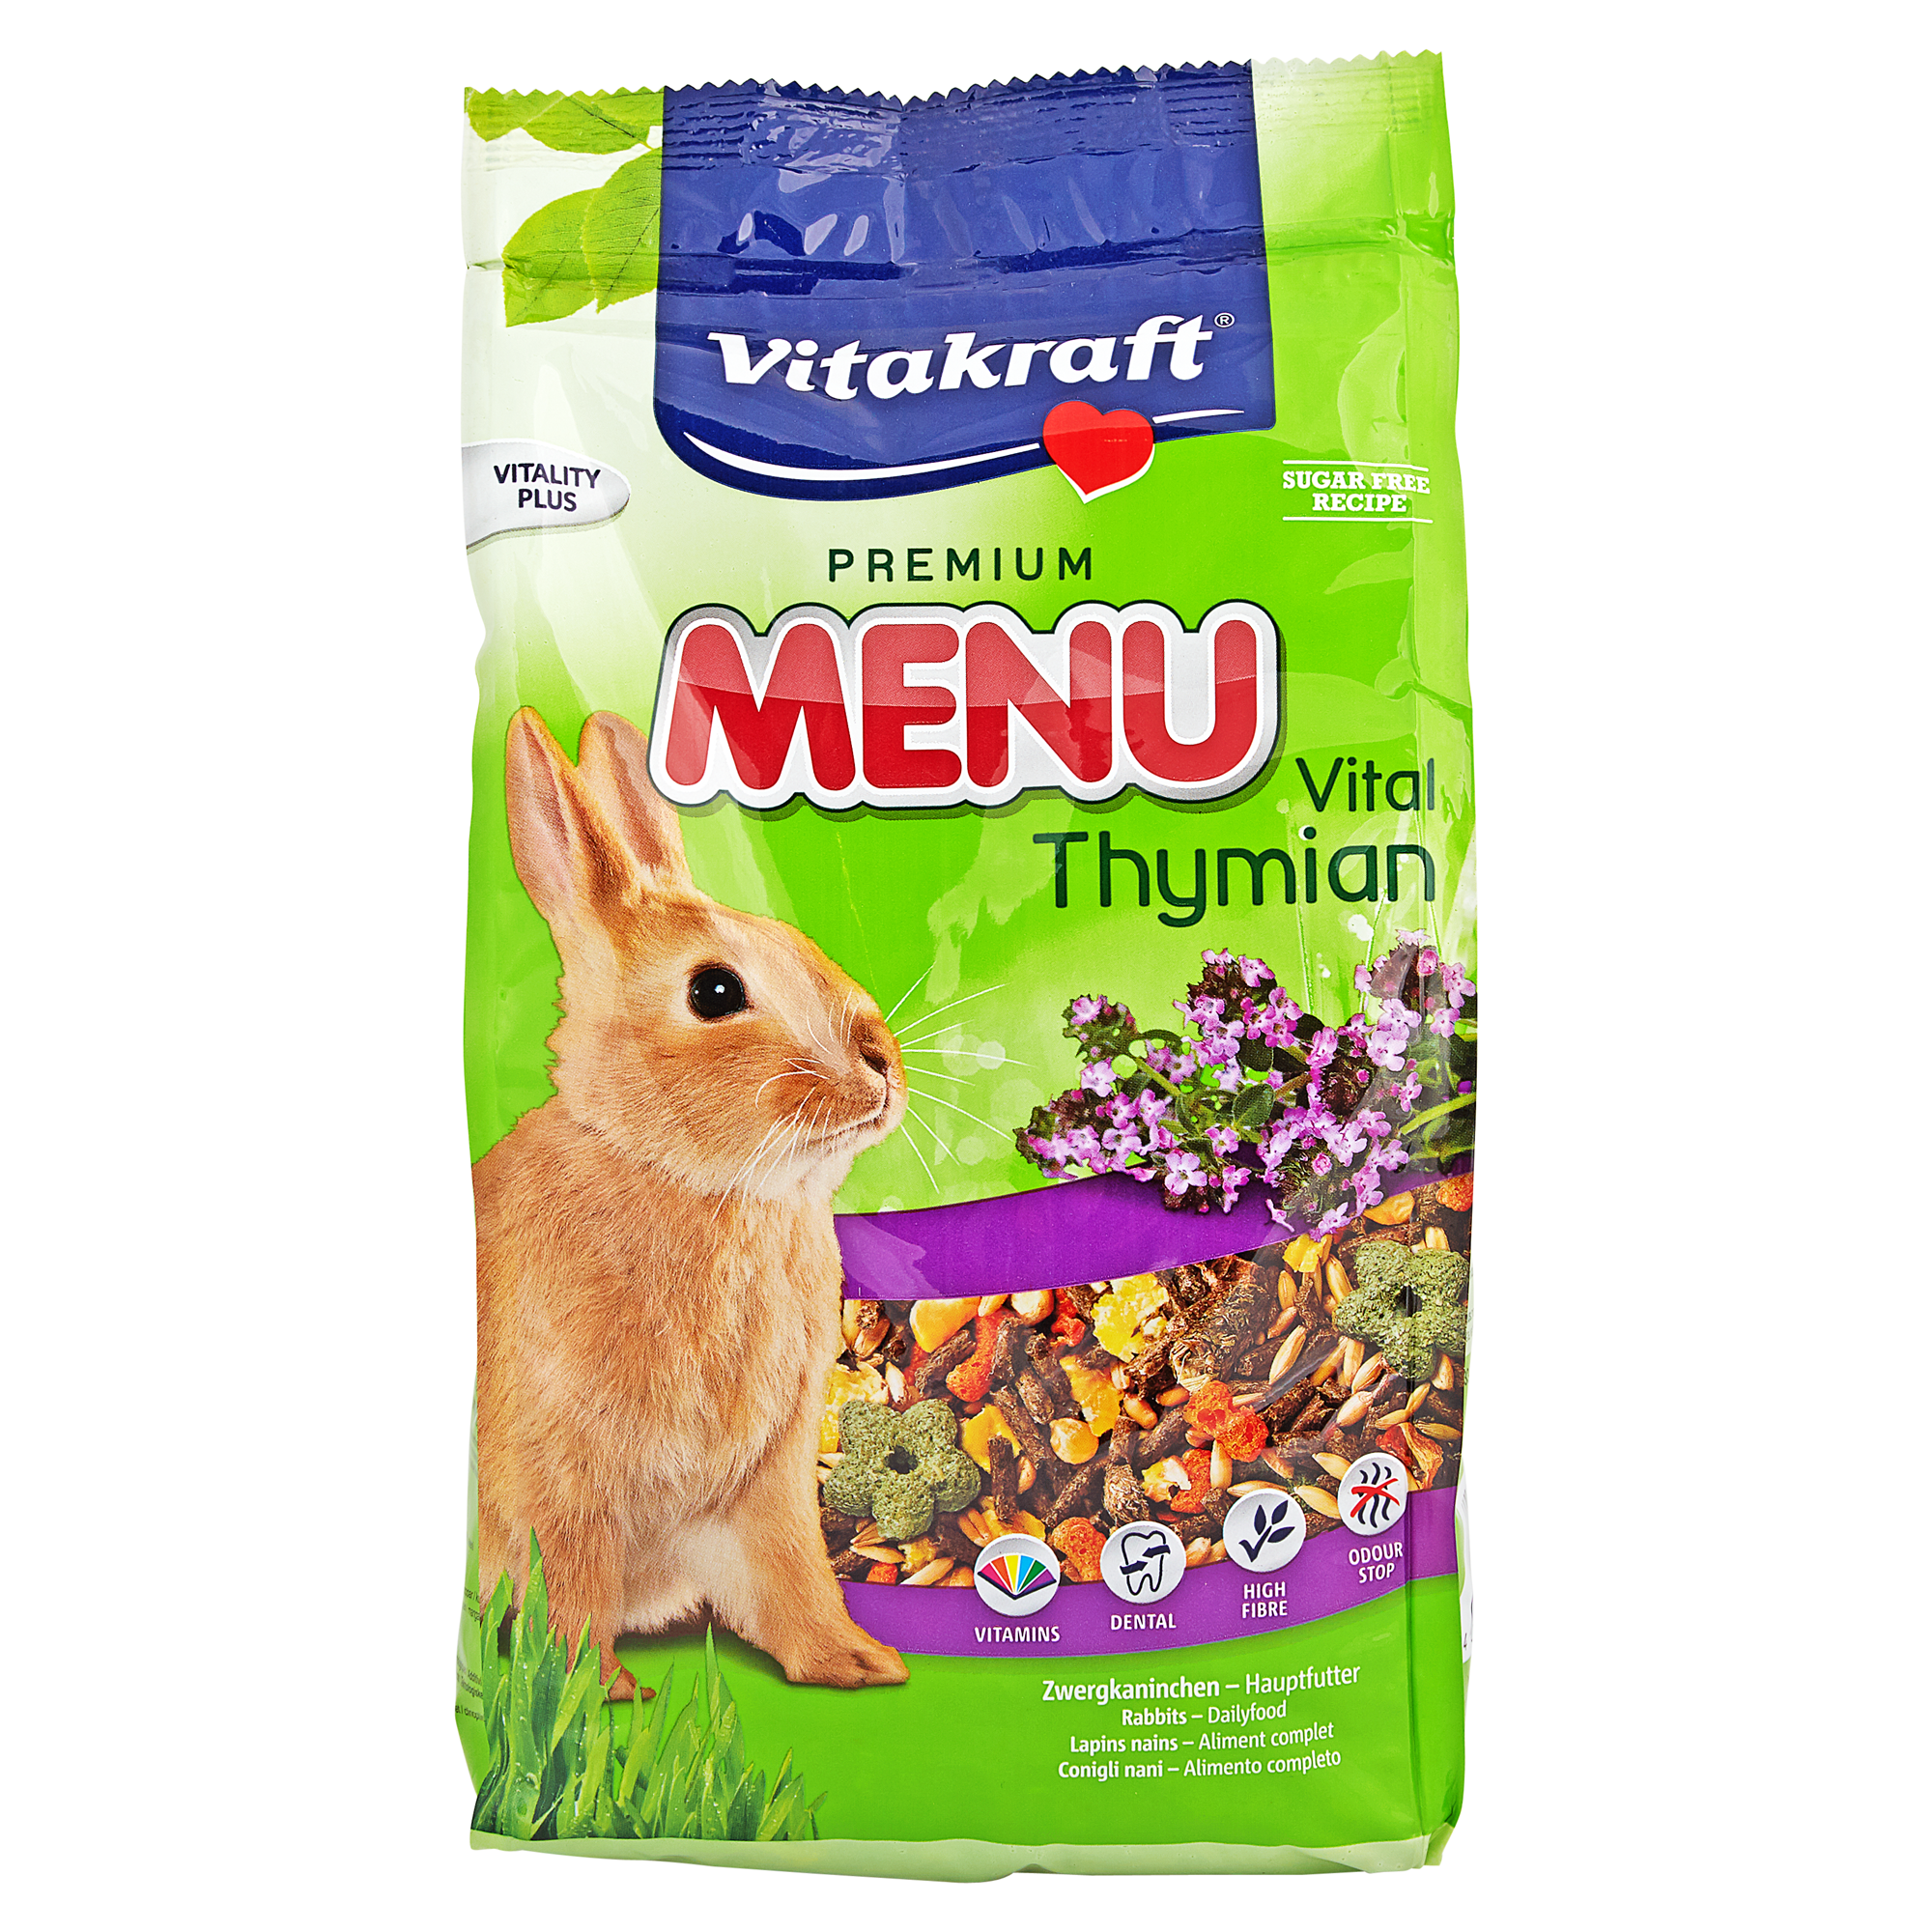 Kaninchenfutter Premium Menu Vital Thymian 1 kg + product picture